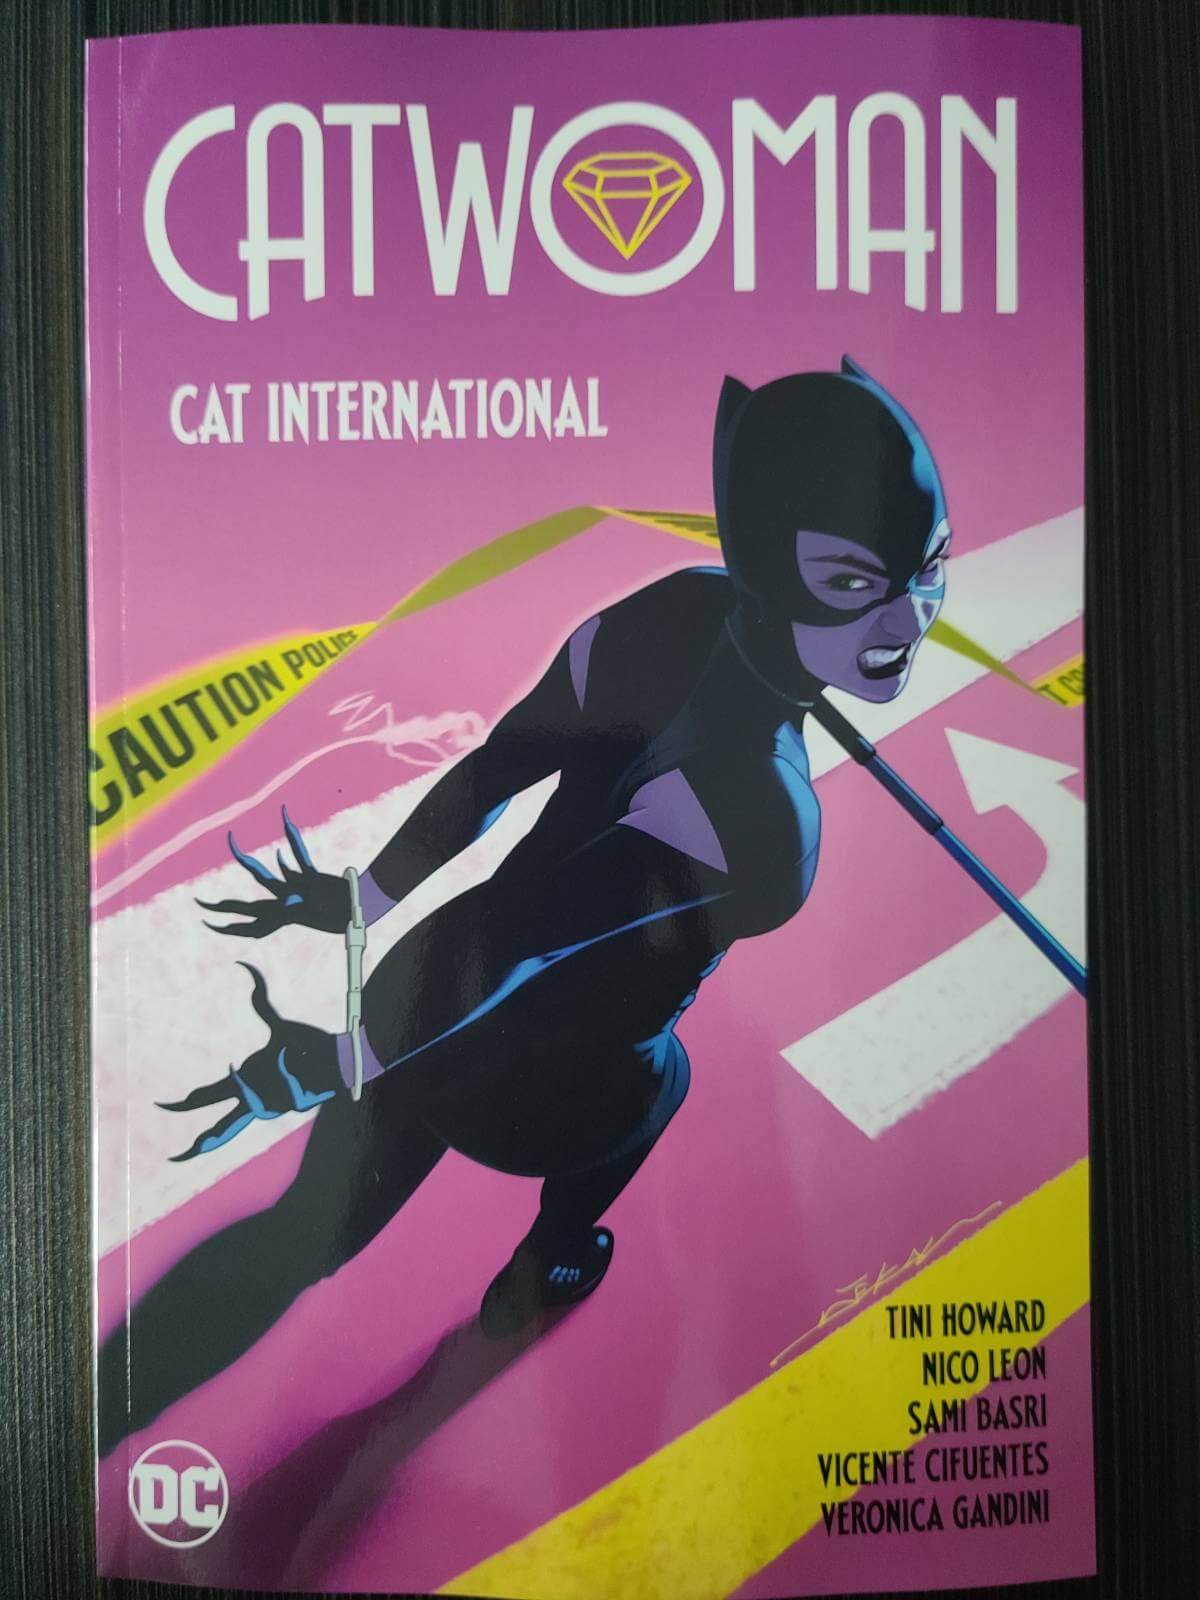 Catwoman TP Vol 02 Cat International